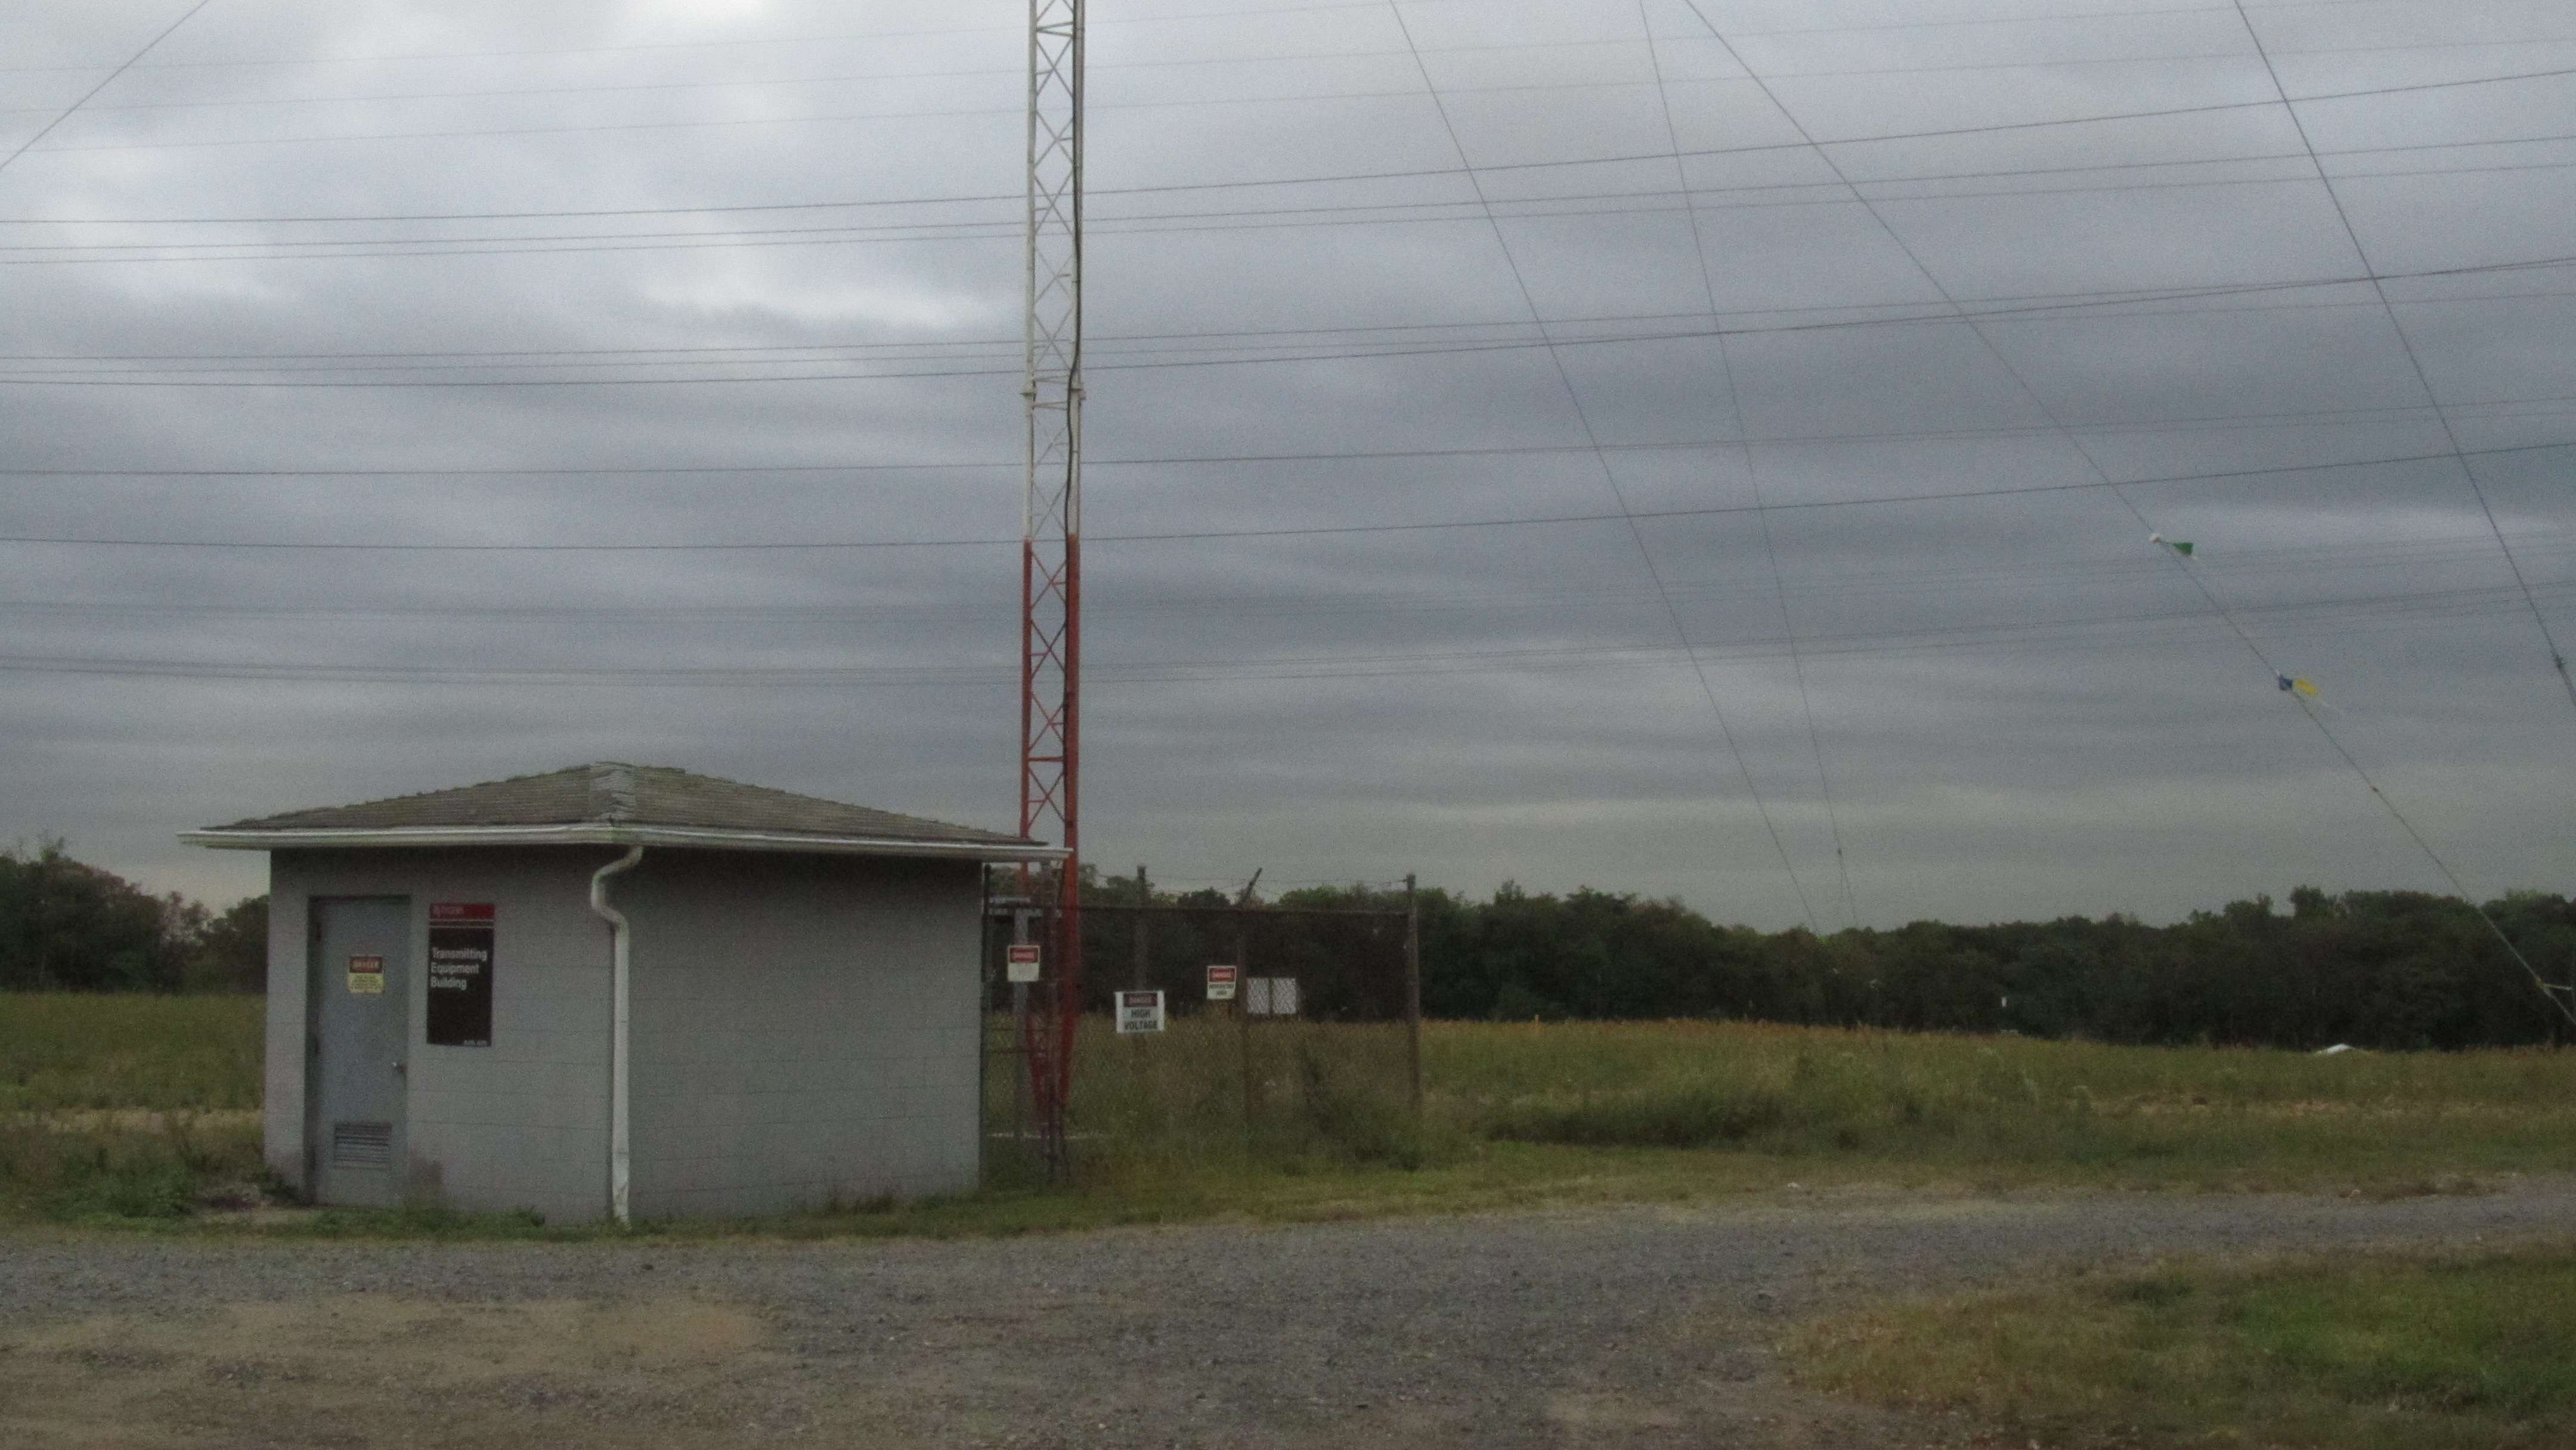 2015 - WRSU Transmitter Building